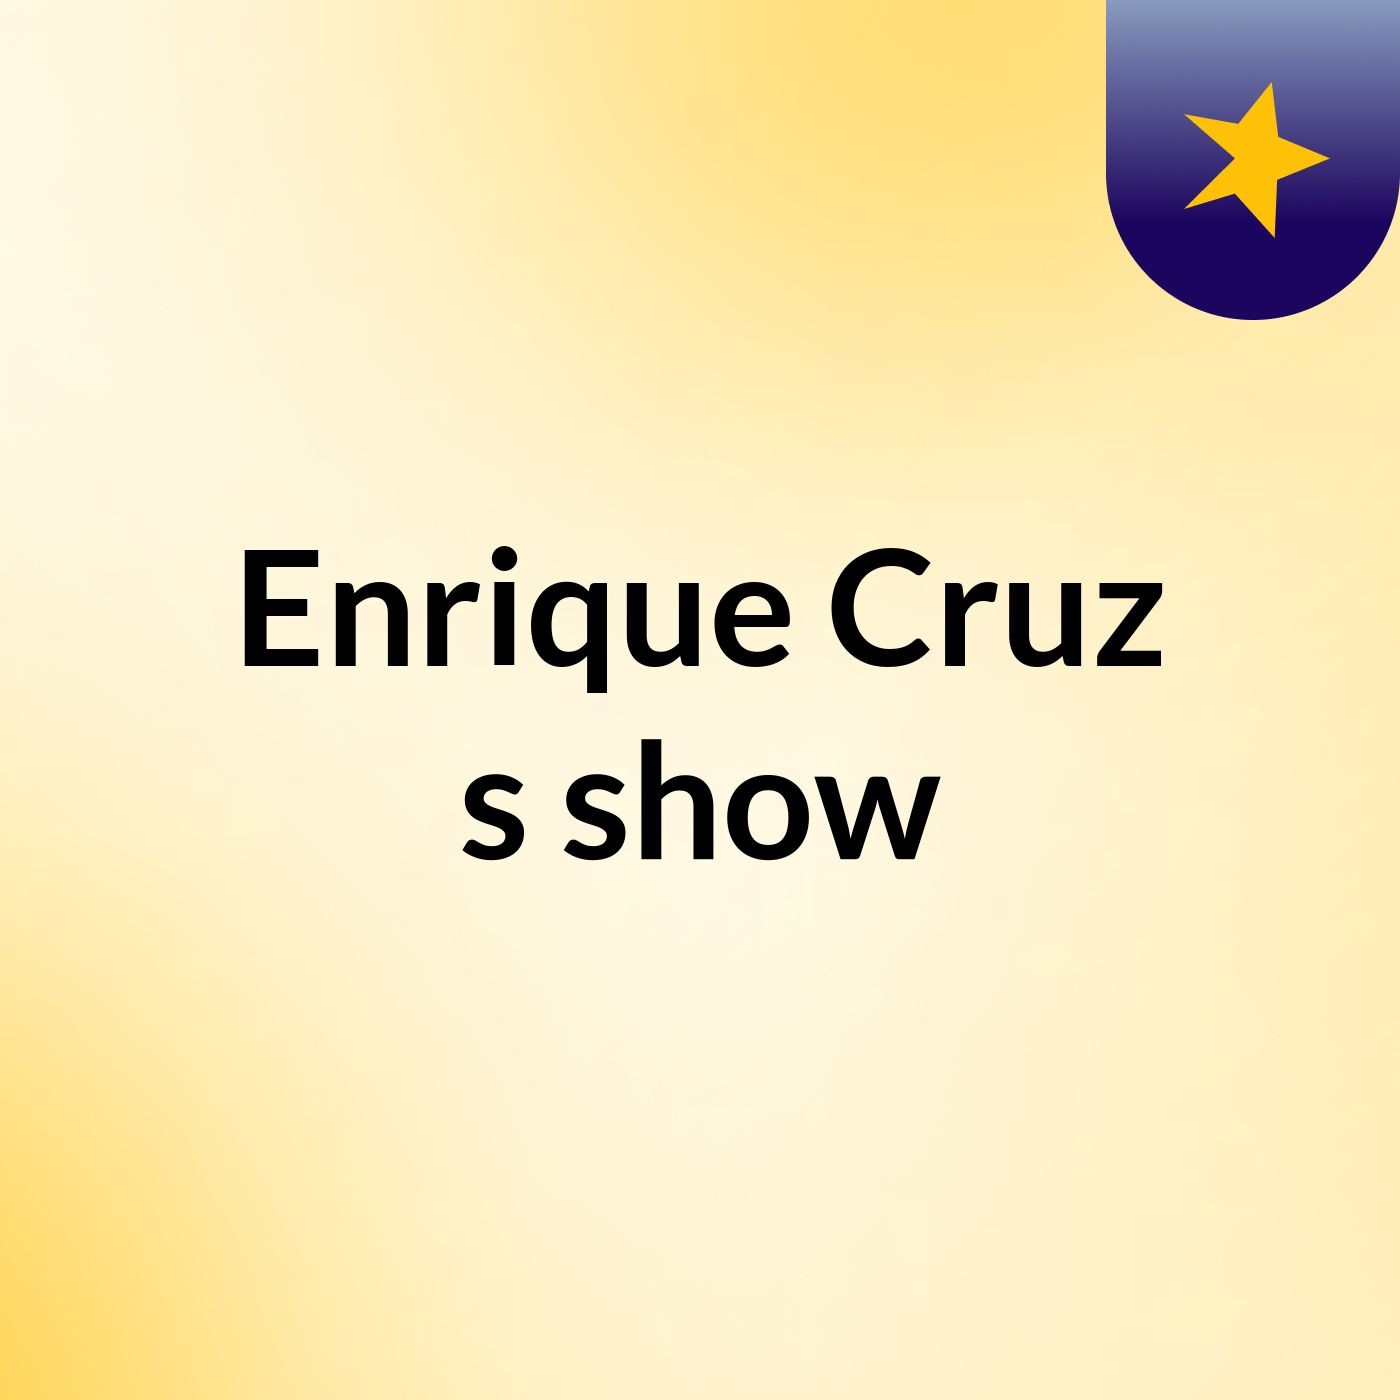 Enrique Cruz's show